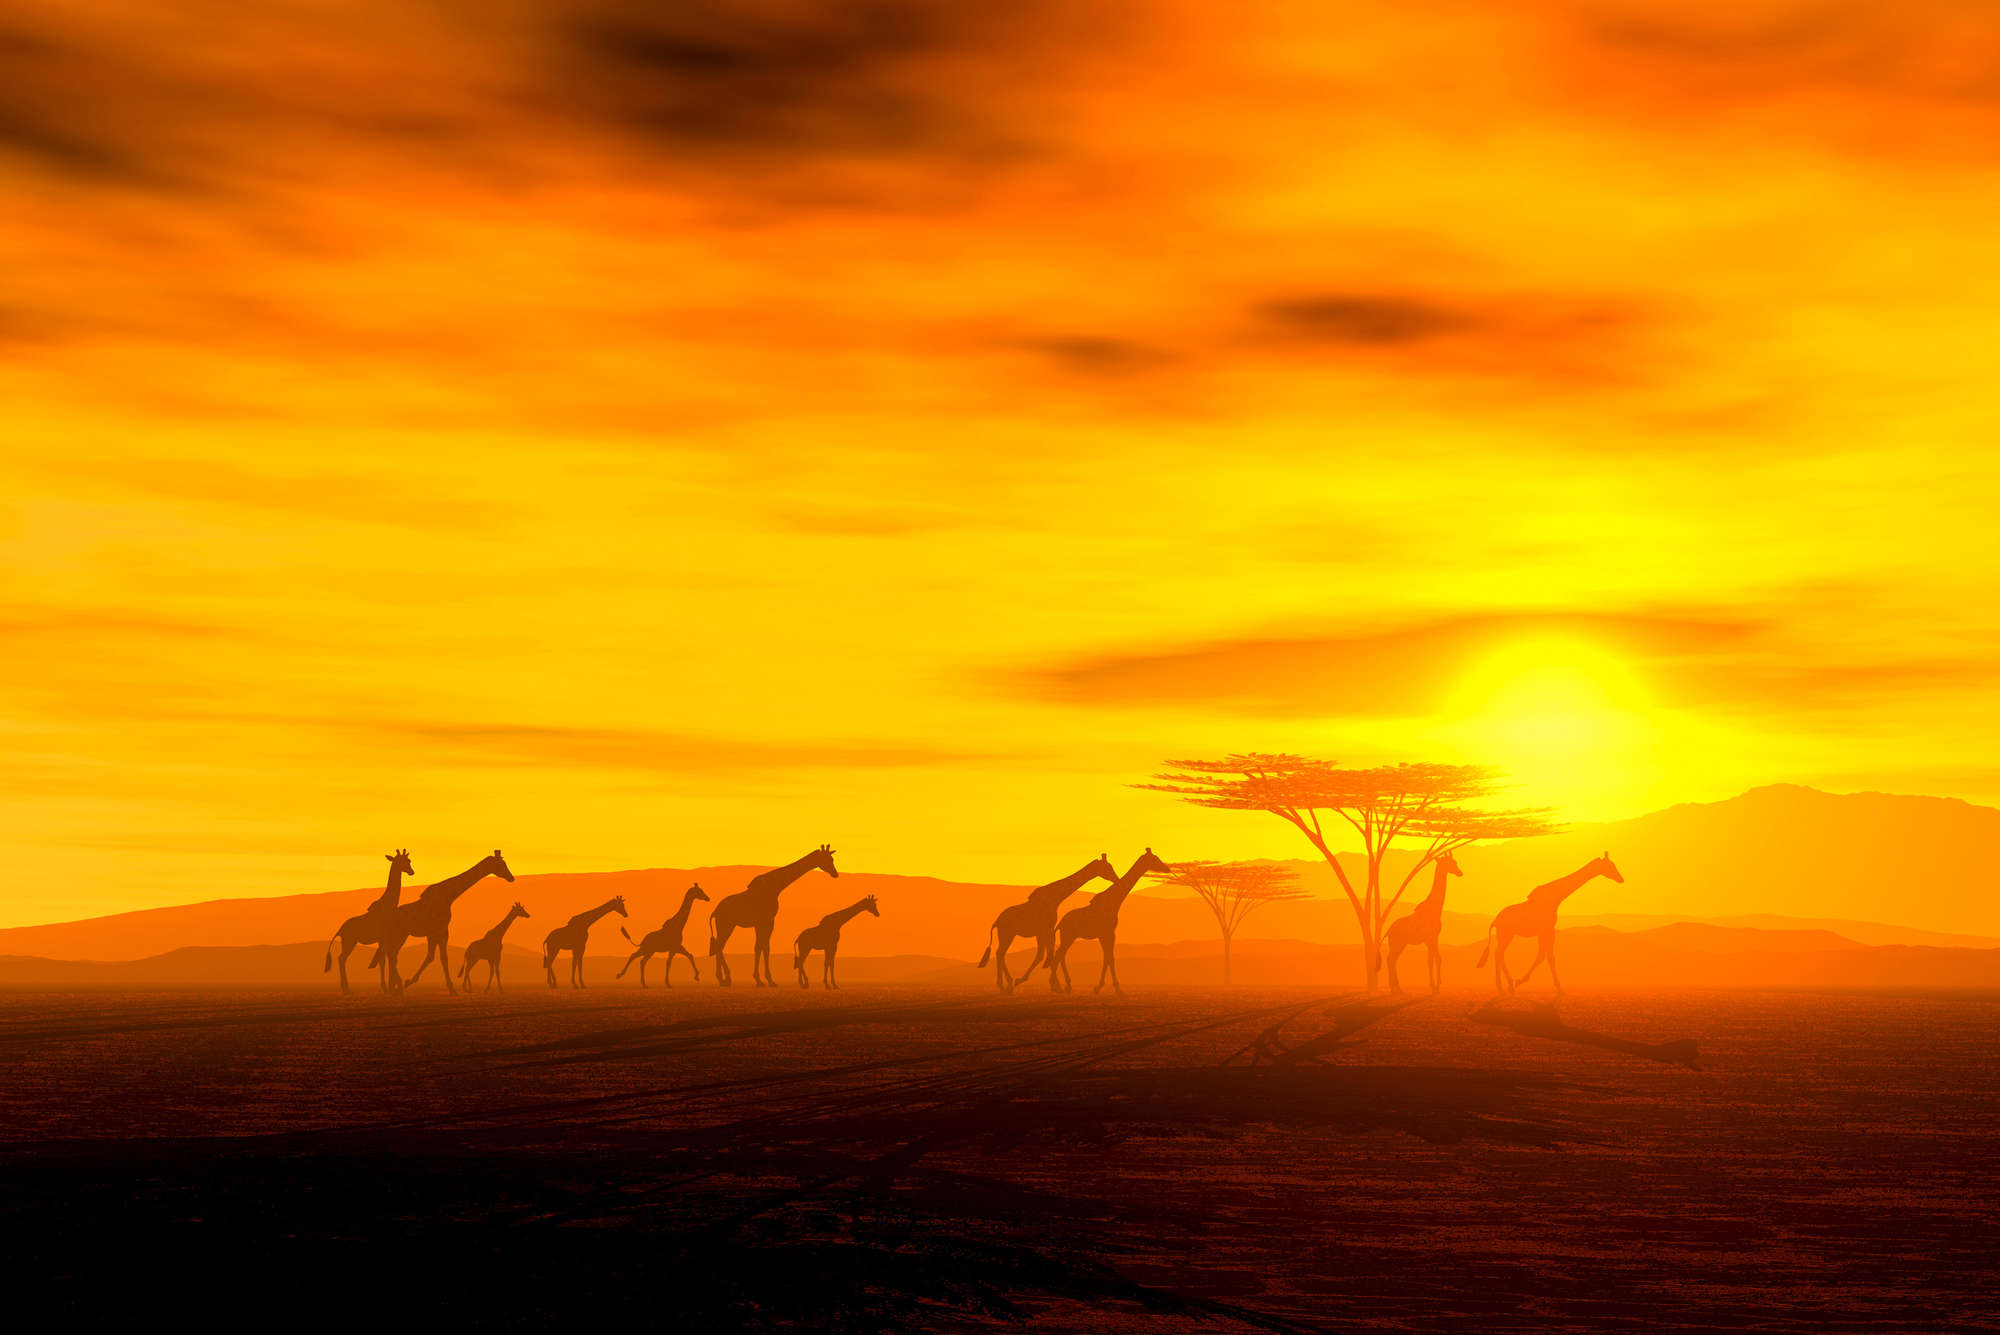             Photo wallpaper Savannah with herd of giraffes - Premium smooth fleece
        